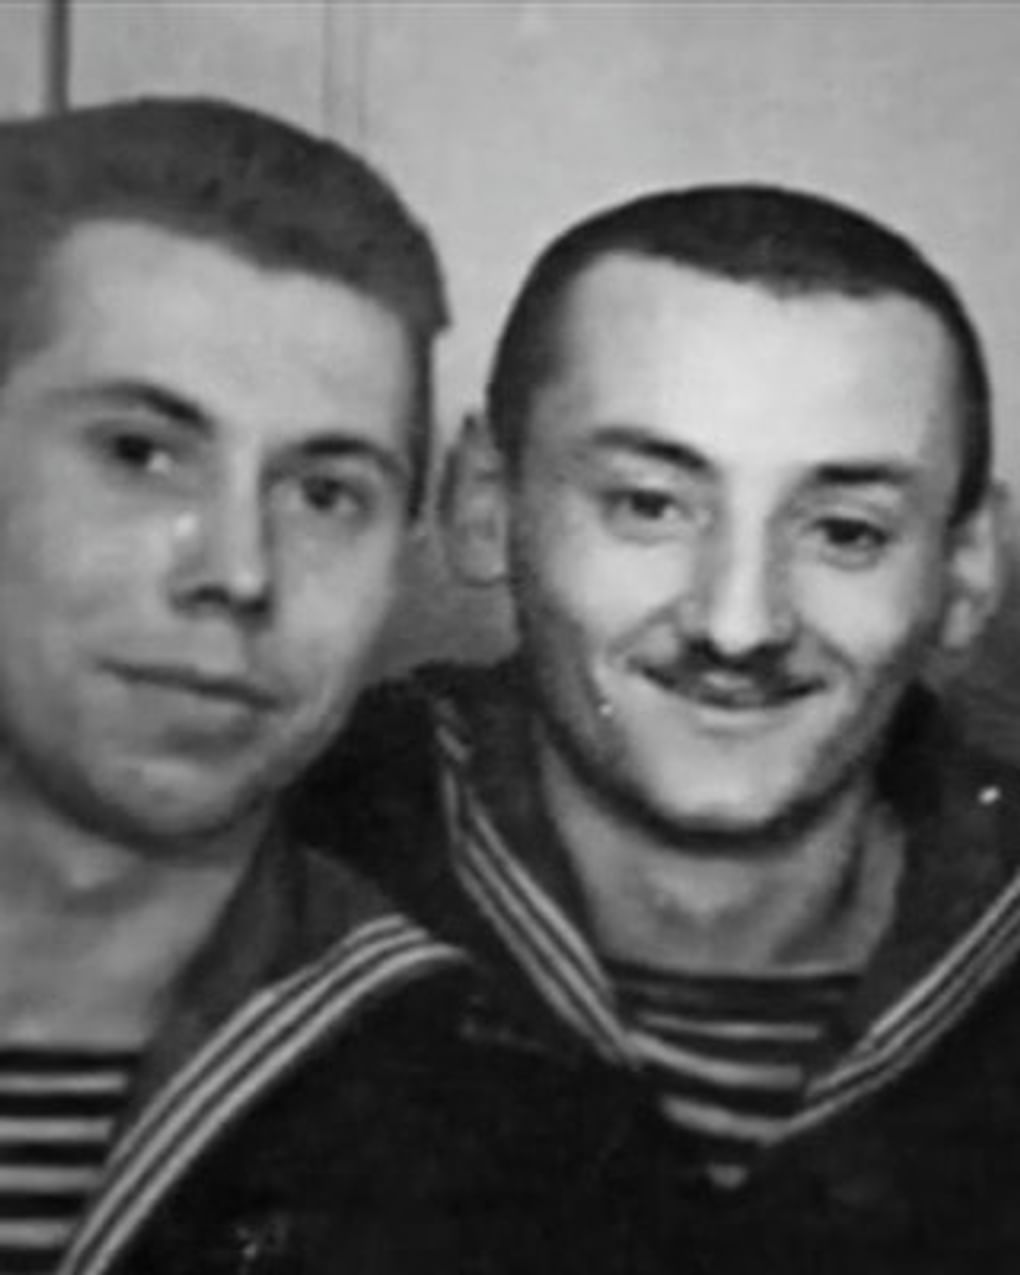 Семен Фарада (Фердман) (справа) с товарищем на службе в Военно-морском флоте. Фотография: aeternamemoria.ru